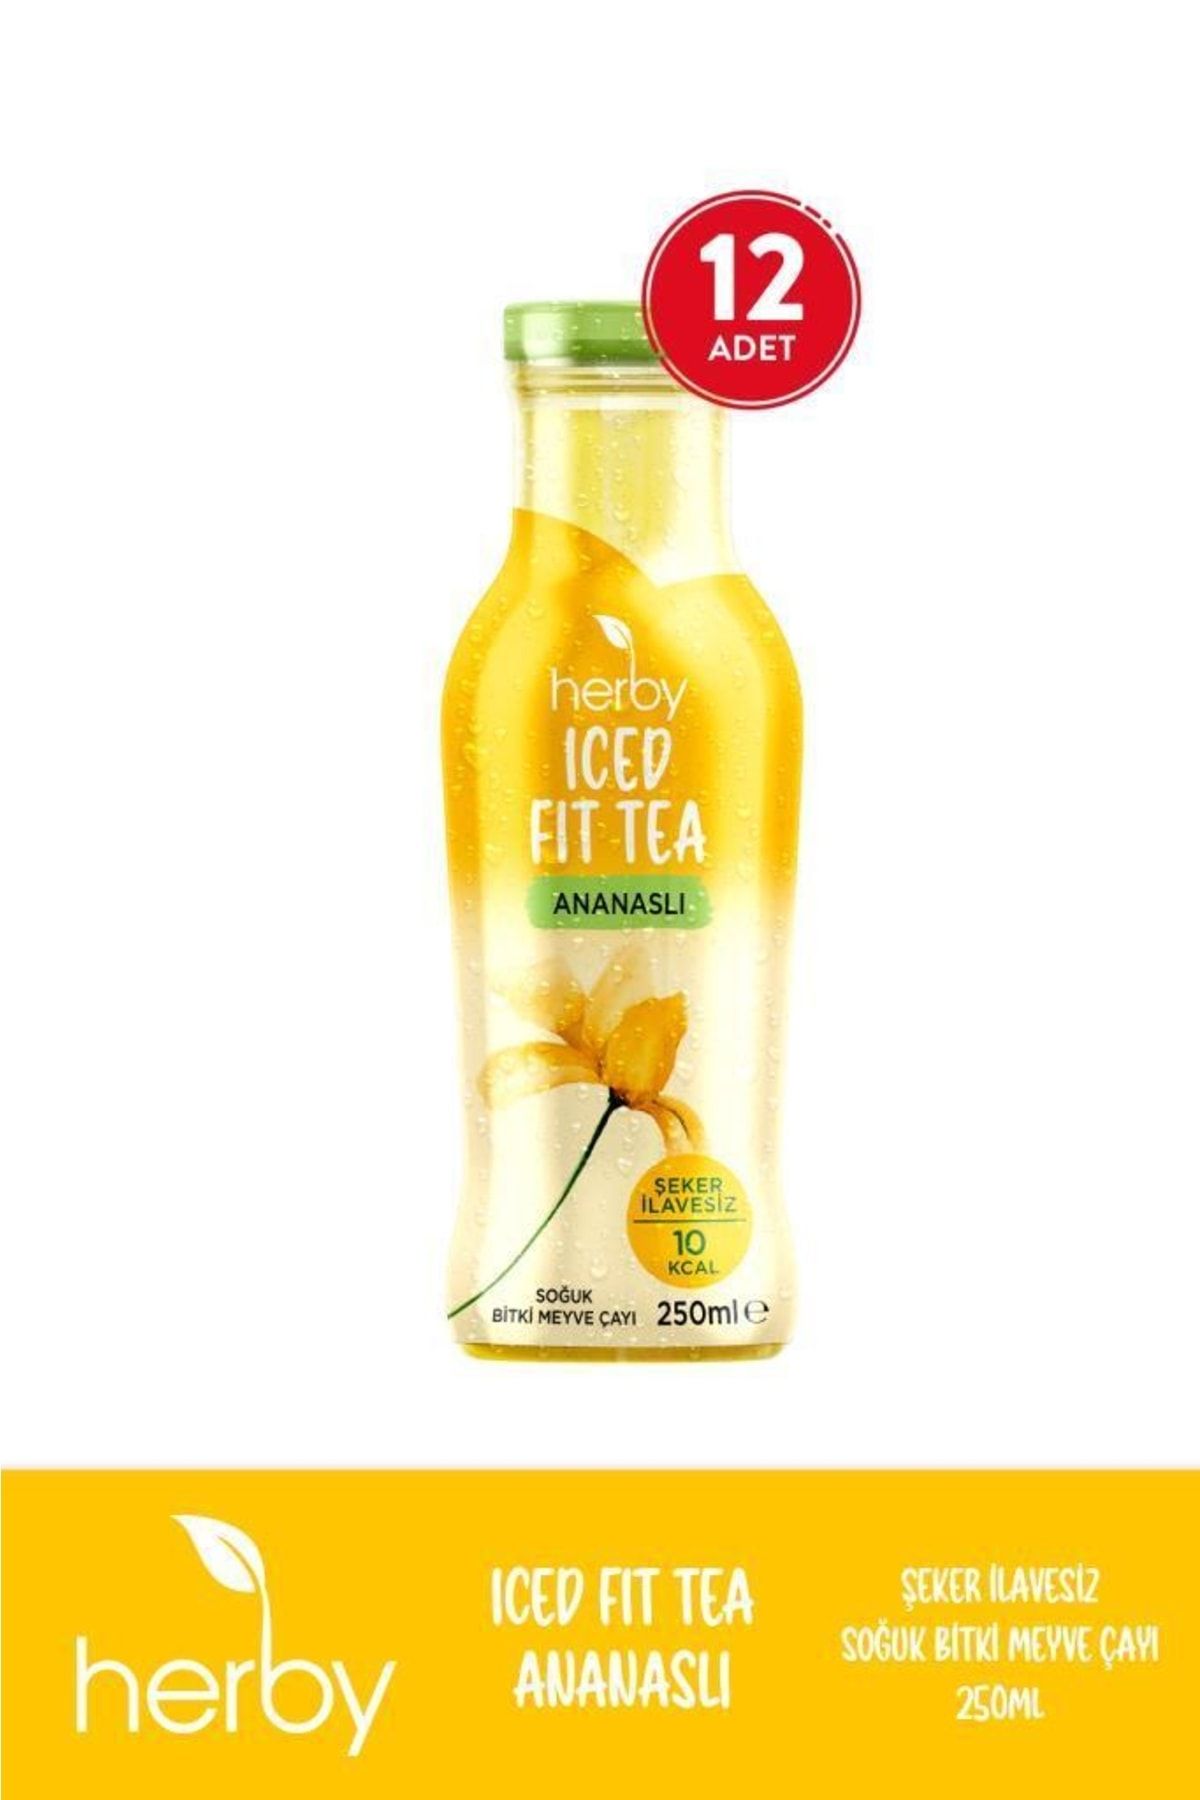 Herby Soğuk Çay Şeker Ilavesiz 12'li Iced Fit Tea Ananaslı 250 ml